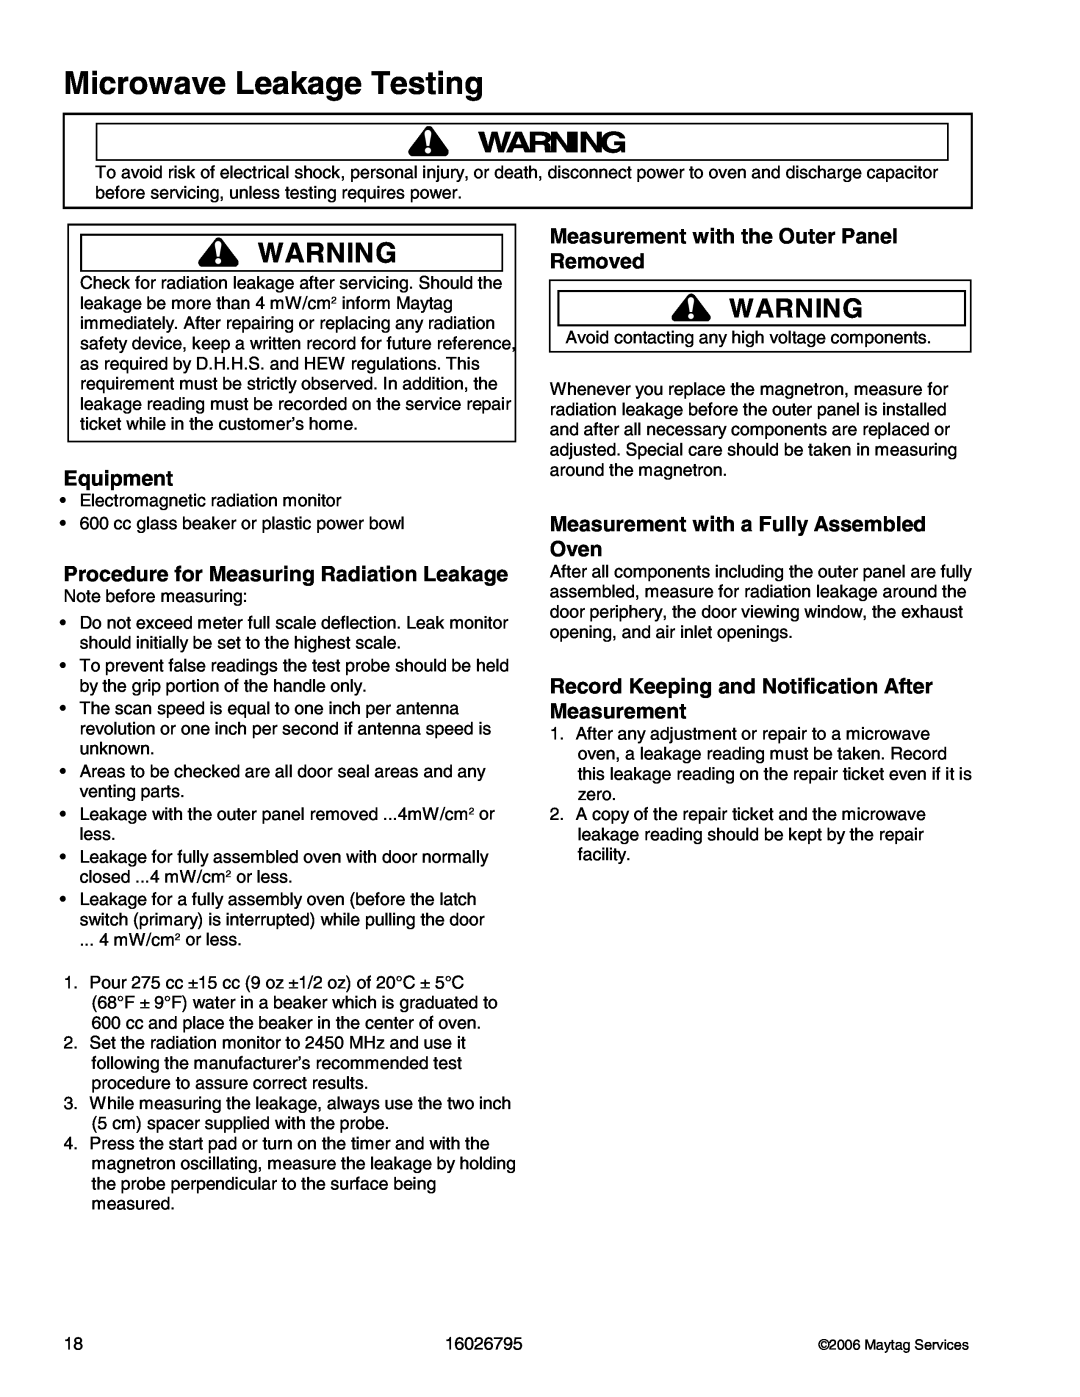 Maytag 1800 W - 2005 manual Microwave Leakage Testing, Equipment, Procedure for Measuring Radiation Leakage 